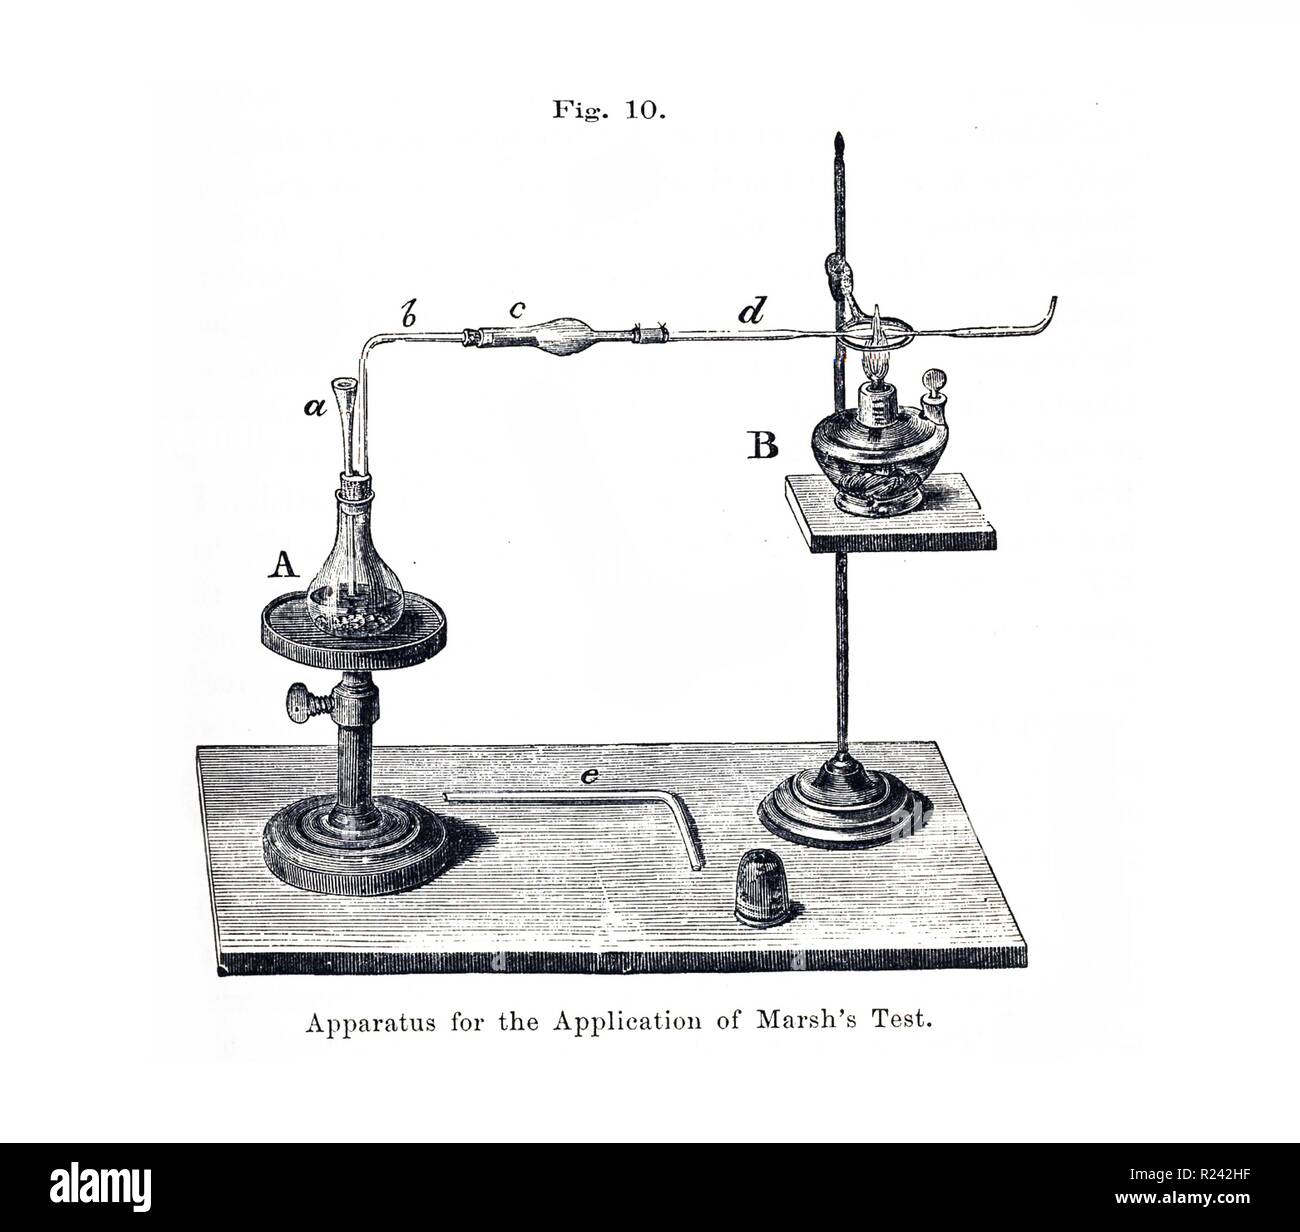 Marsh Test Apparatus, Steel engraving, 1867 Stock Photo